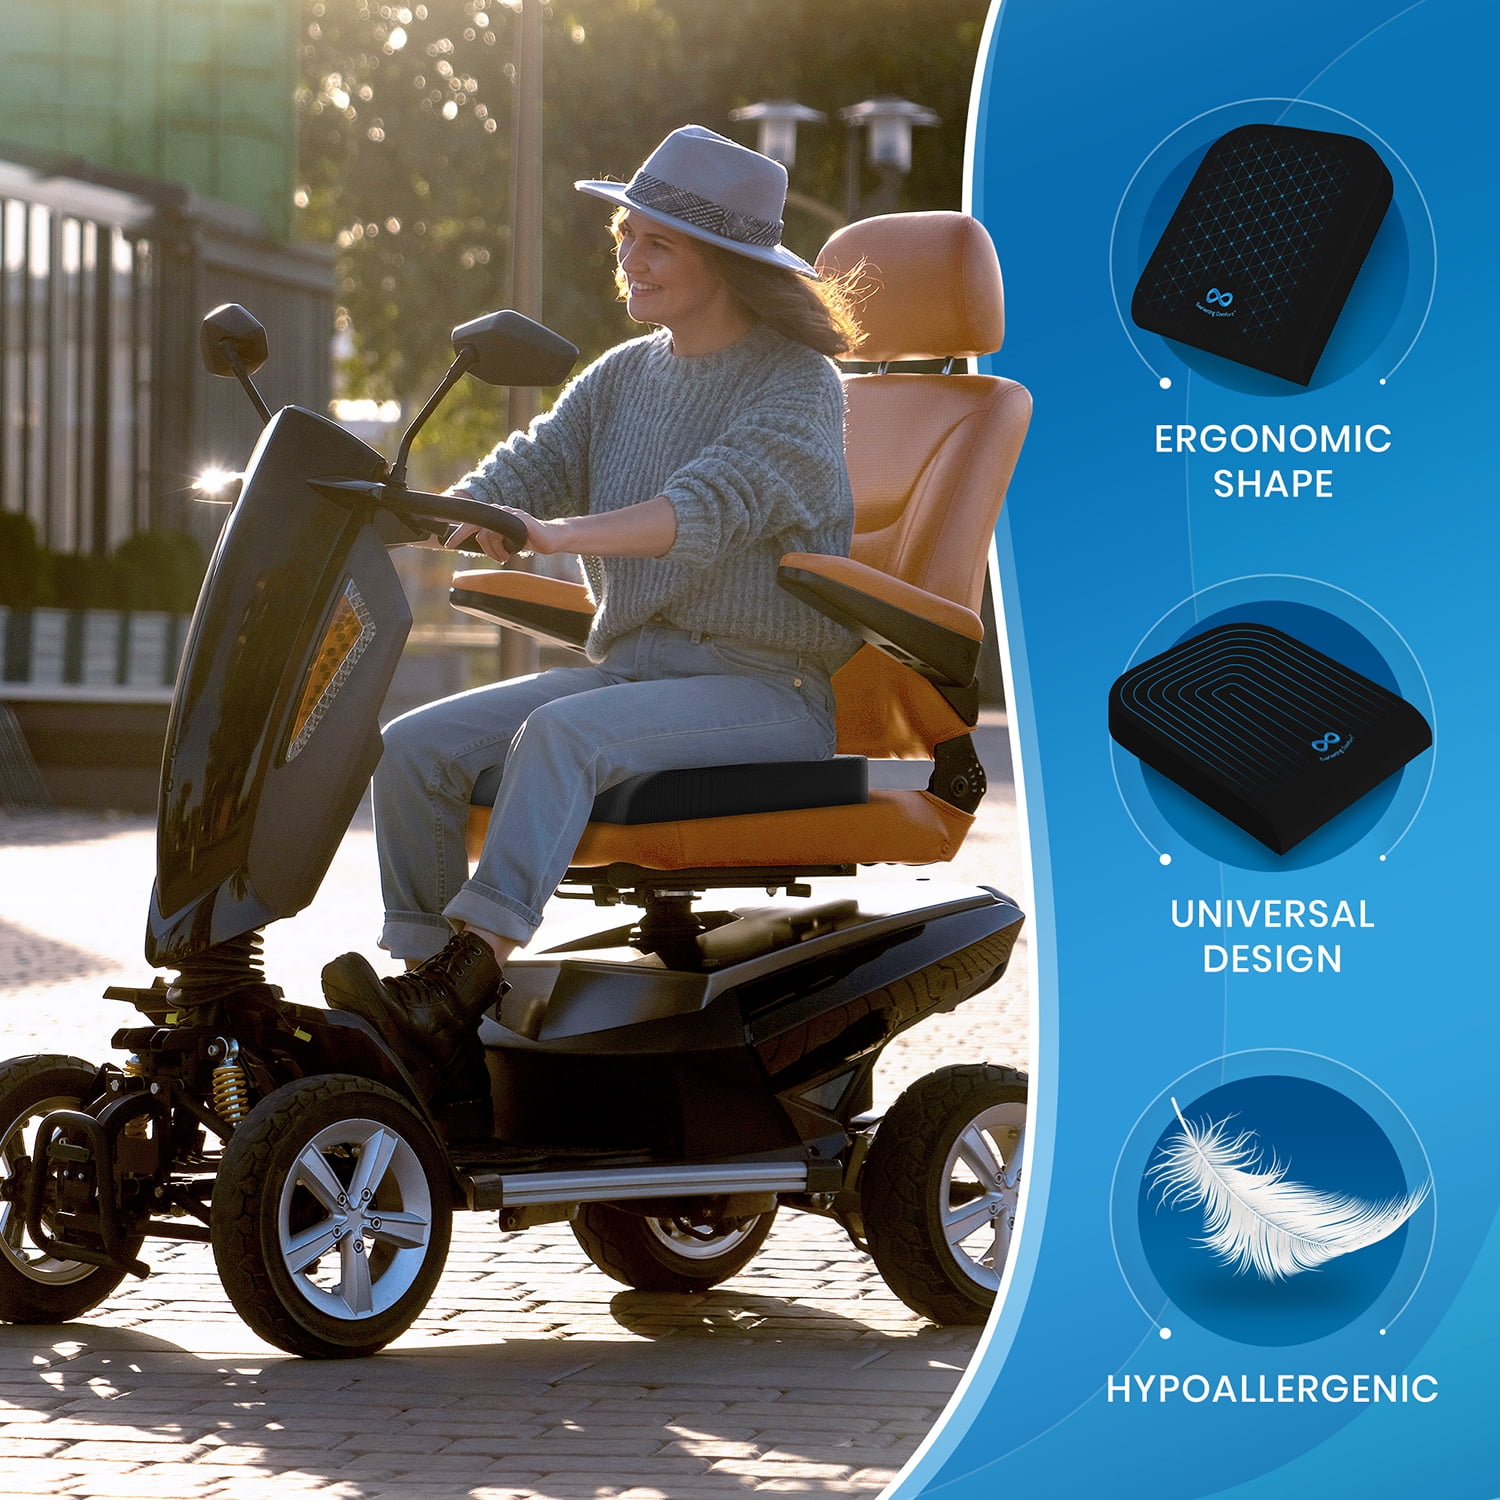 Everlasting Comfort 100% Pure Memory Foam Wheelchair Seat Cushion Gel Infused